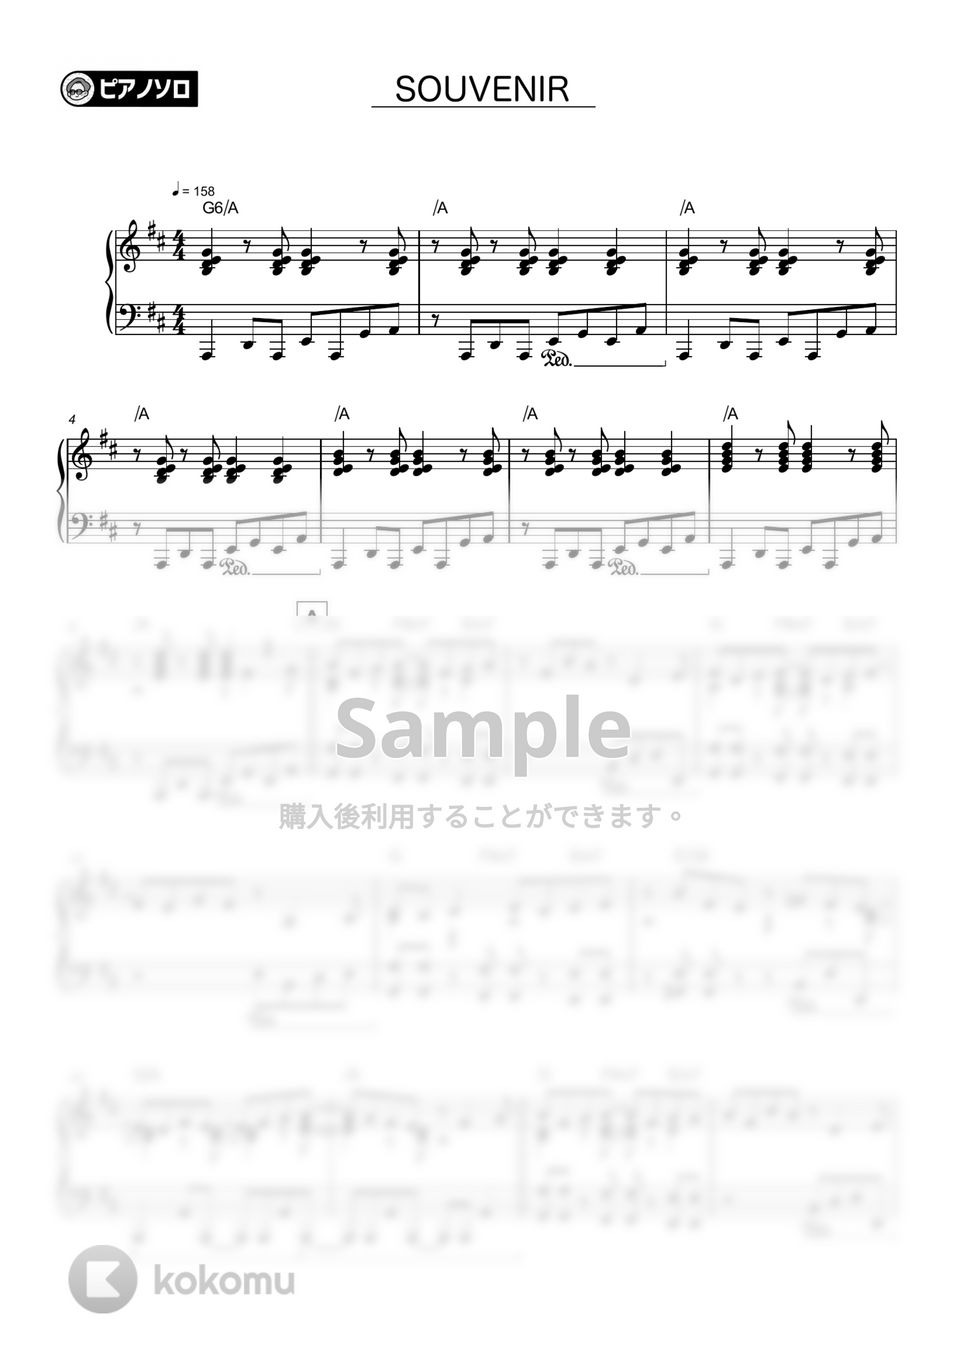 BUMP OF CHICKEN - SOUVENIR by シータピアノ